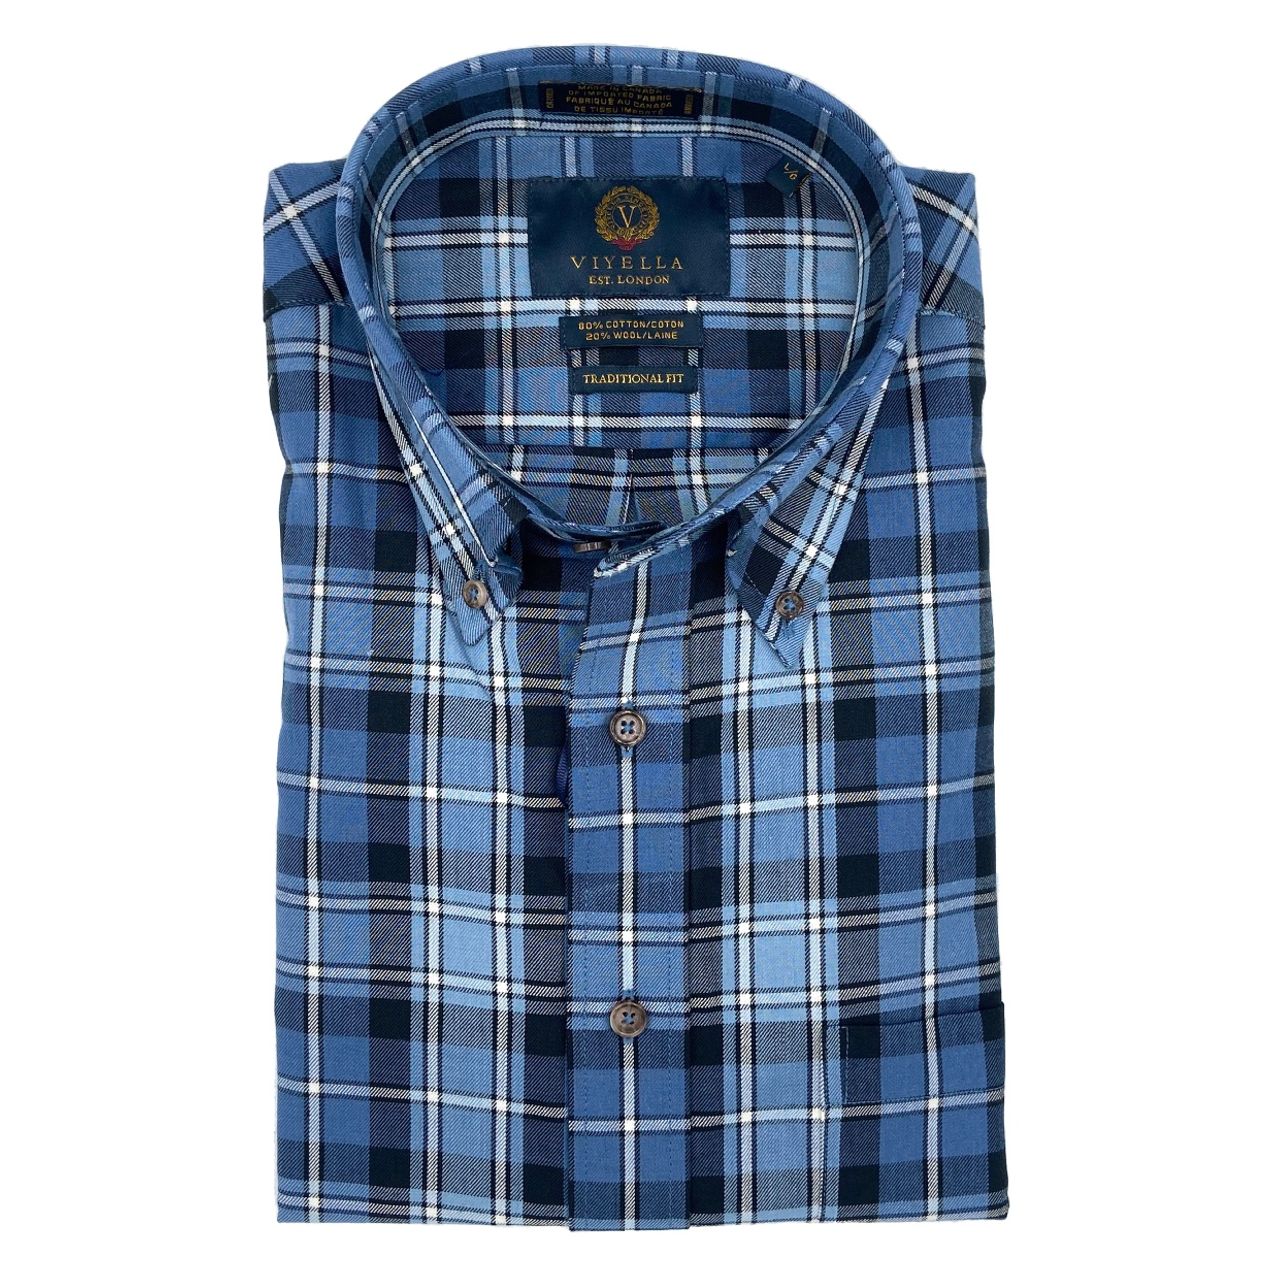 Multi Blue Plaid Cotton and Wool Blend Button-Down Shirt by Viyella